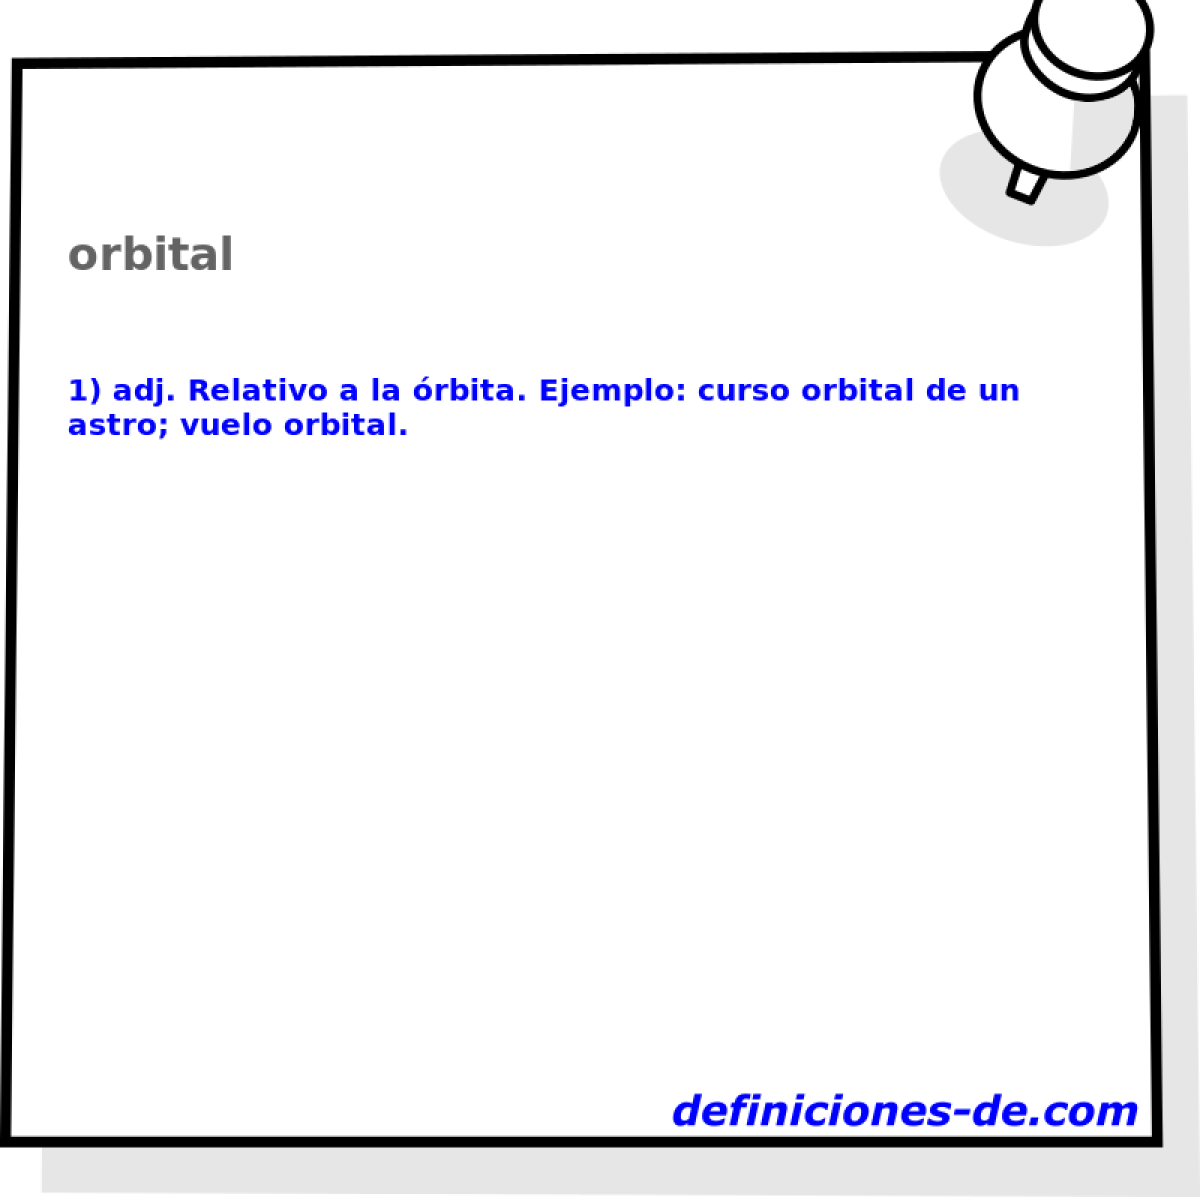 orbital 